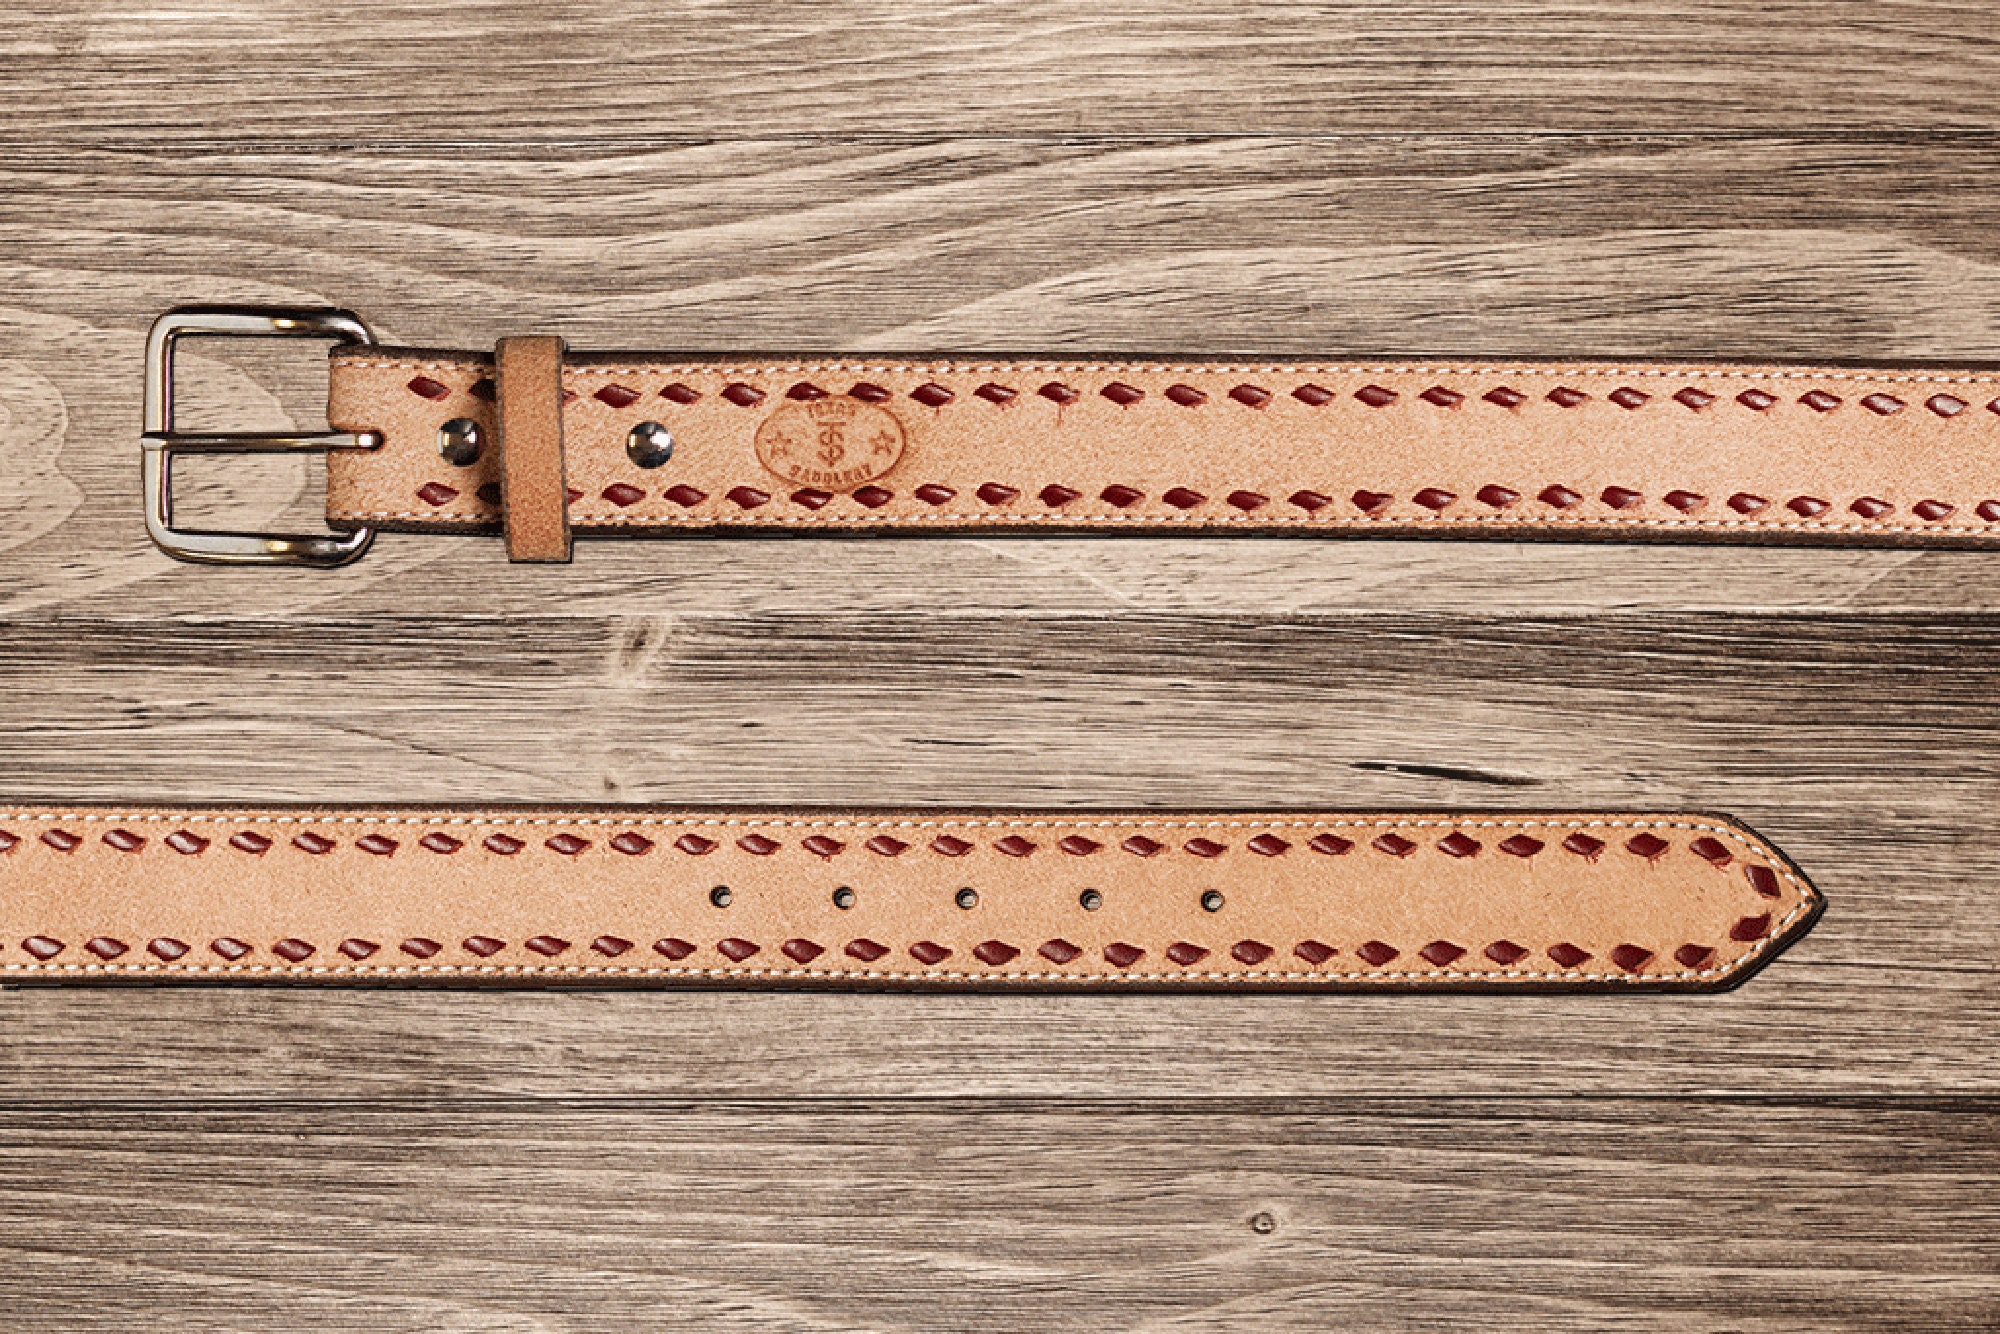 Western Leather Roughout Buckstitch Belt Handmade Leather | Etsy